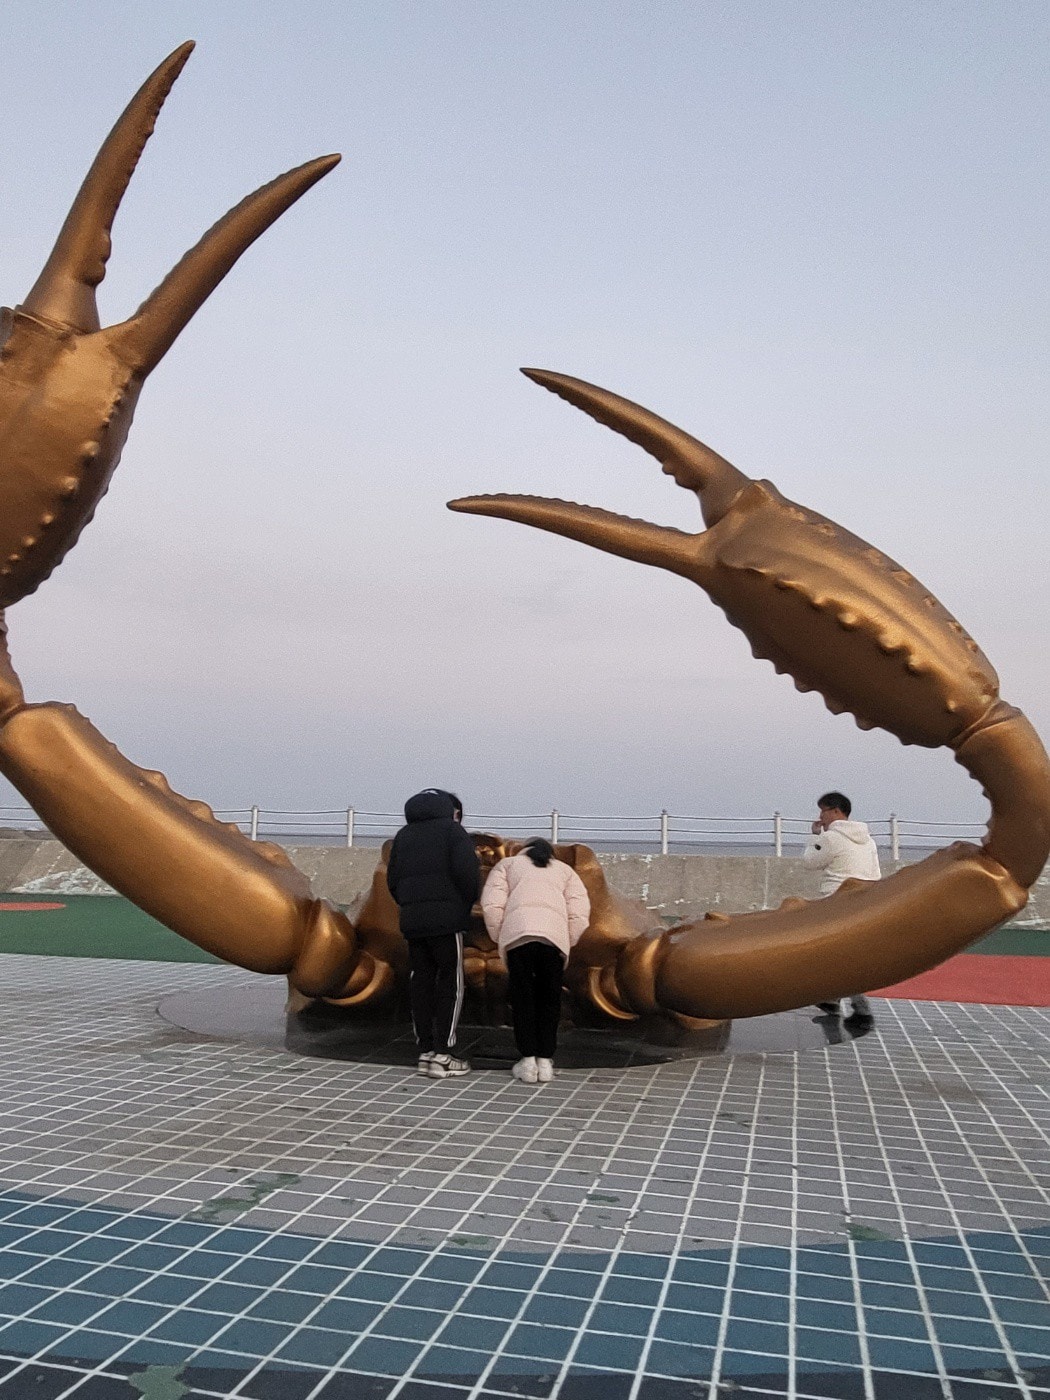 Yeongdeok住宿加早餐「海鱼」
# Ganggu港口#, # Gyeongjeong海滩#
钓鱼、水肺潜水
1分钟#私人住宅#